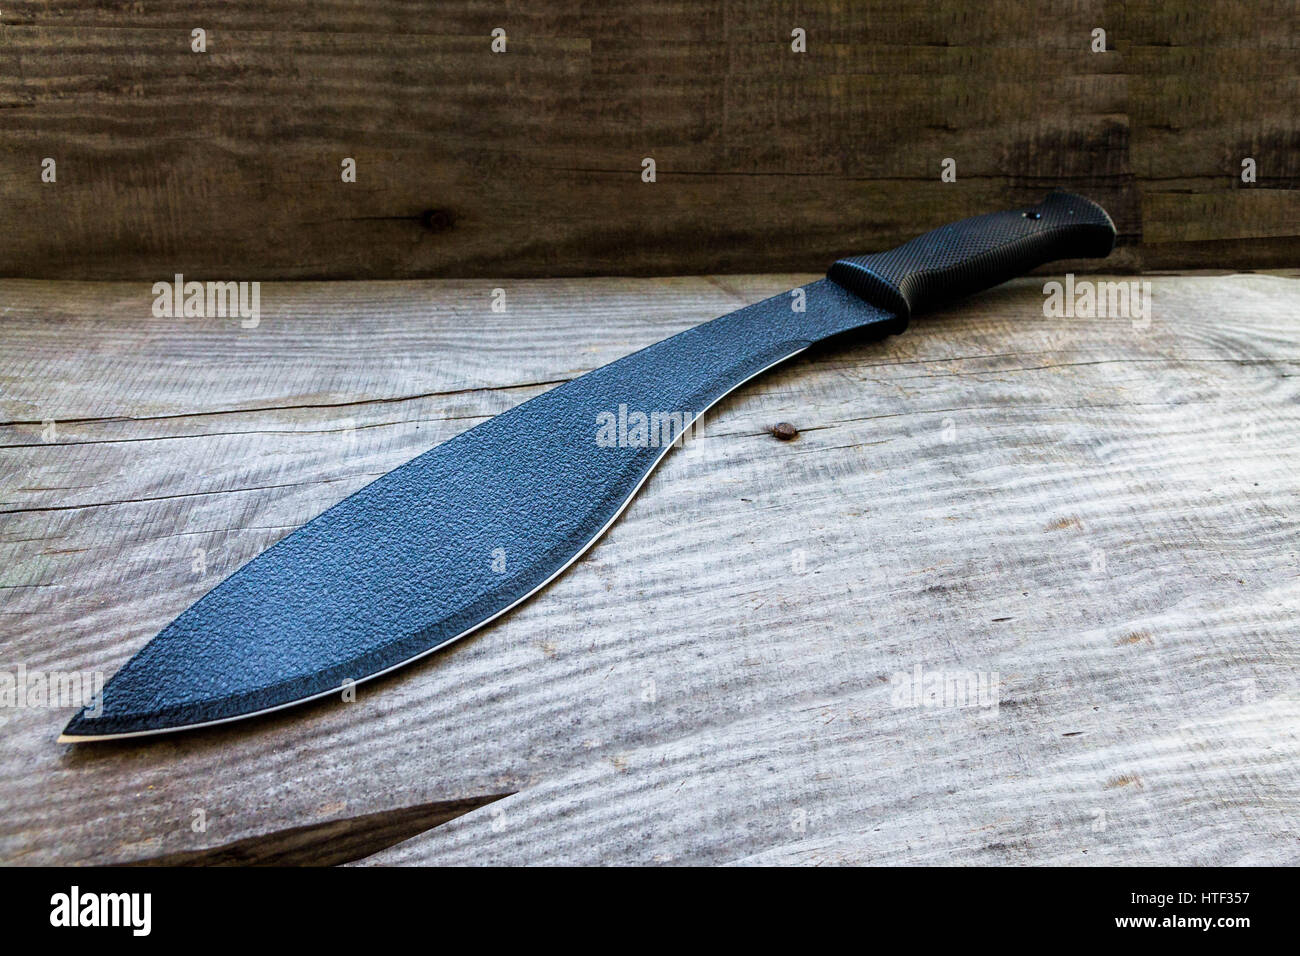 Kukri. Large knife. Machete. Large knife for rural work. Knife for cutting brushwood. Stock Photo